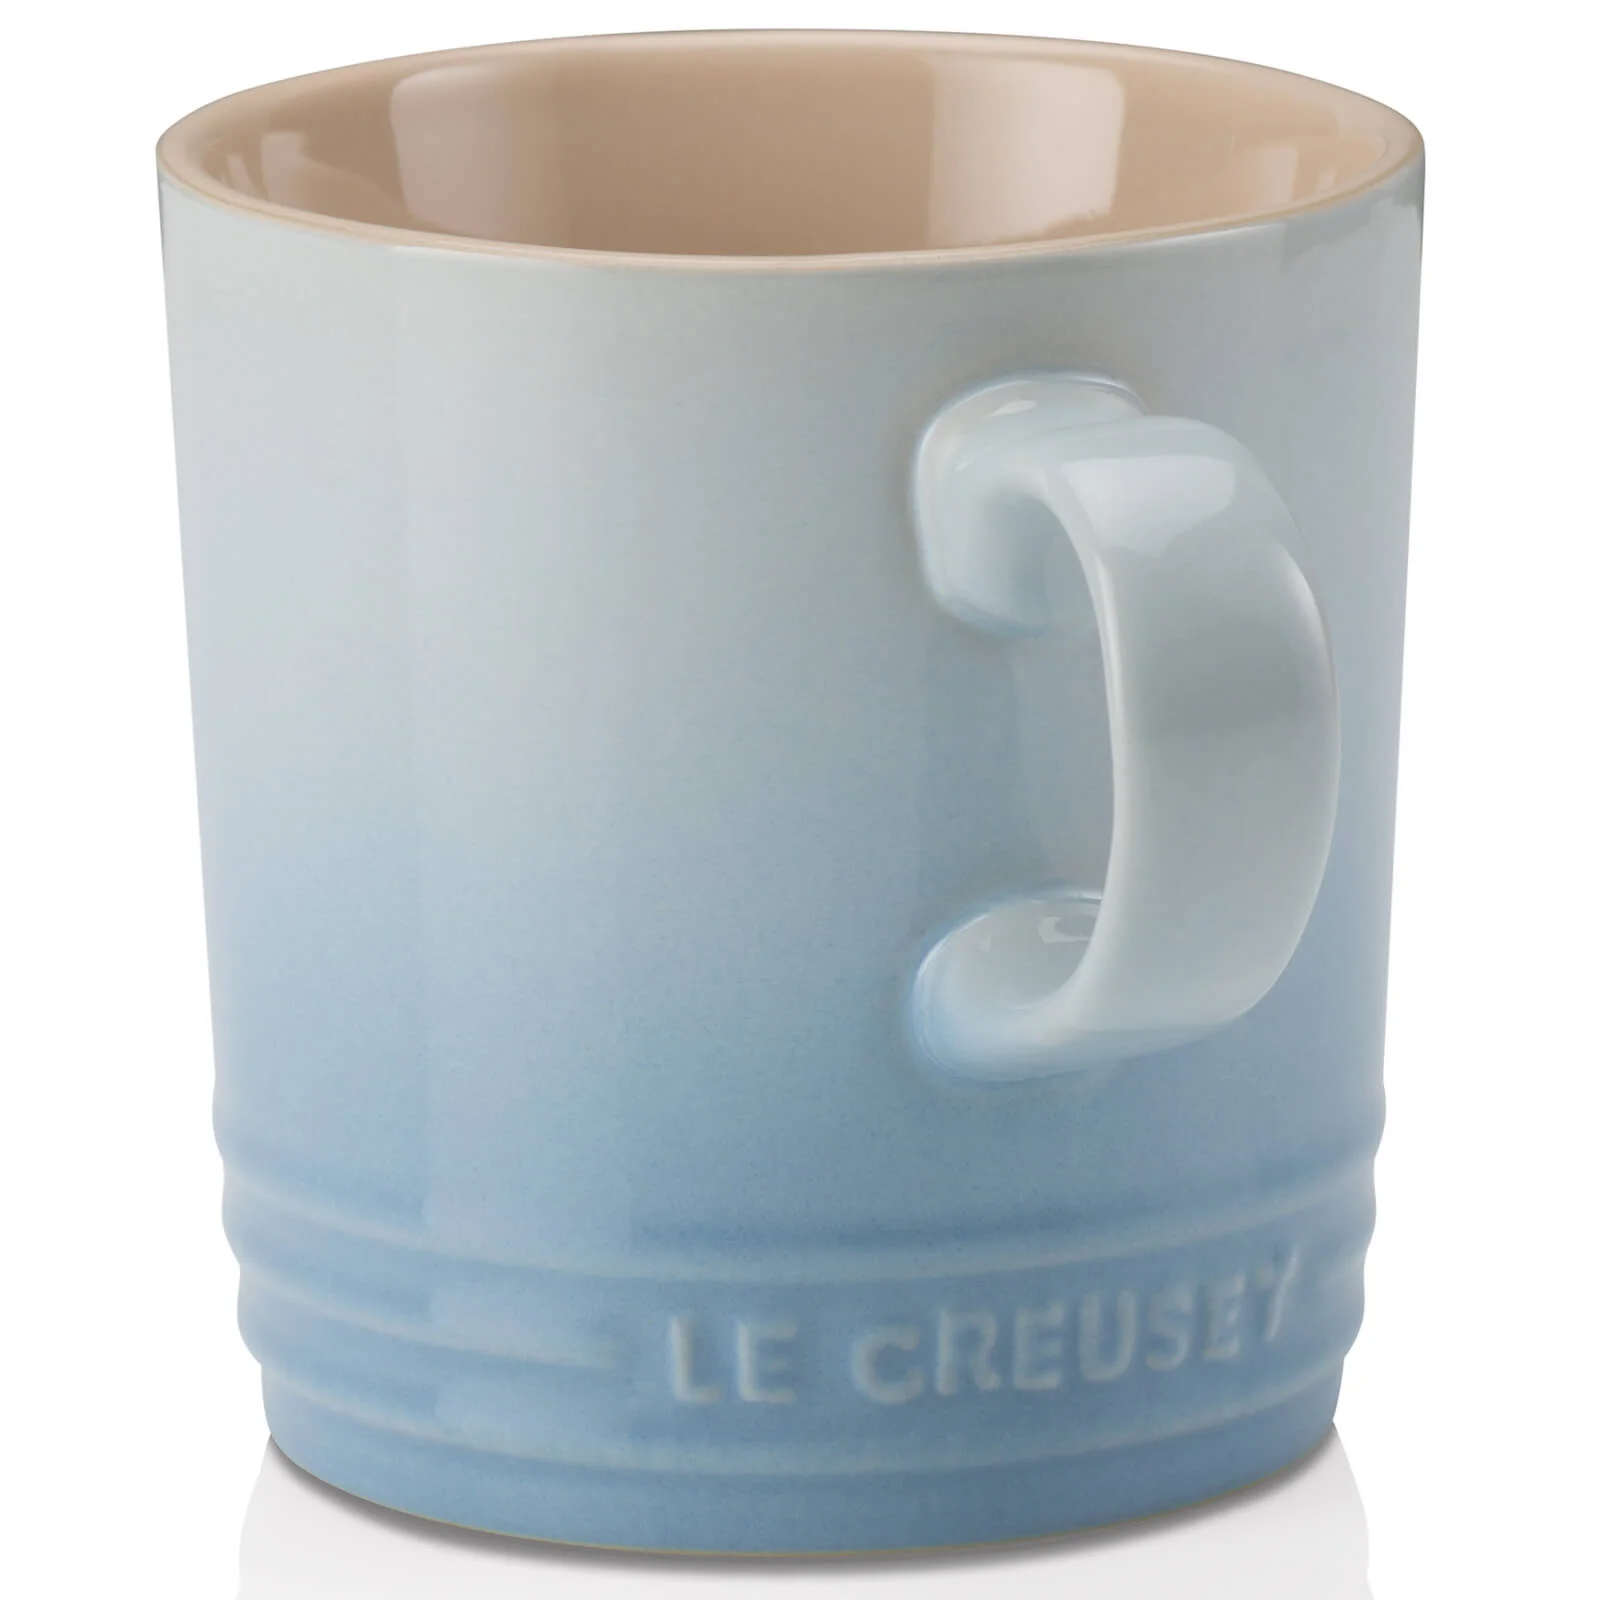 Le Creuset Stoneware Mug - 350ml - Coastal Blue Image 1